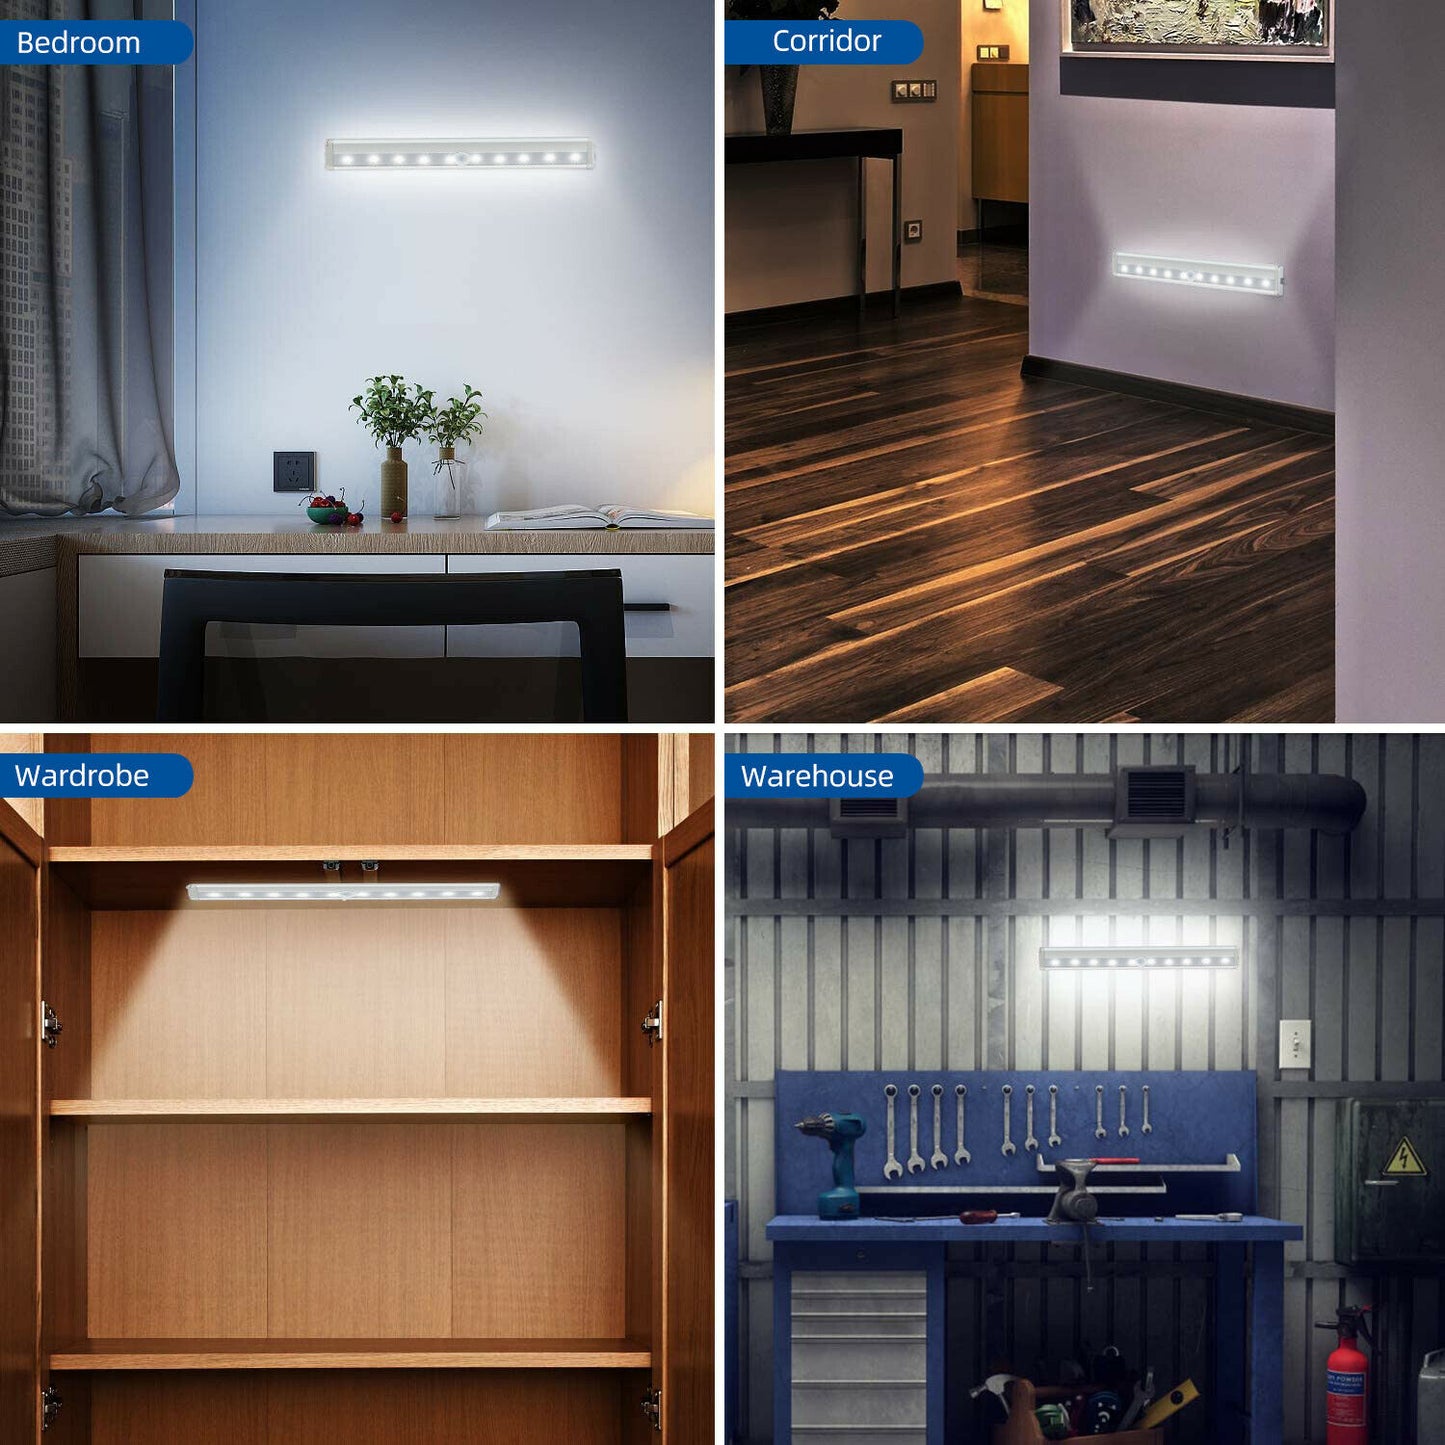 Wireless Motion Sensor Under Cabinet Closet LED Light Kitchen Counter Night Lamp